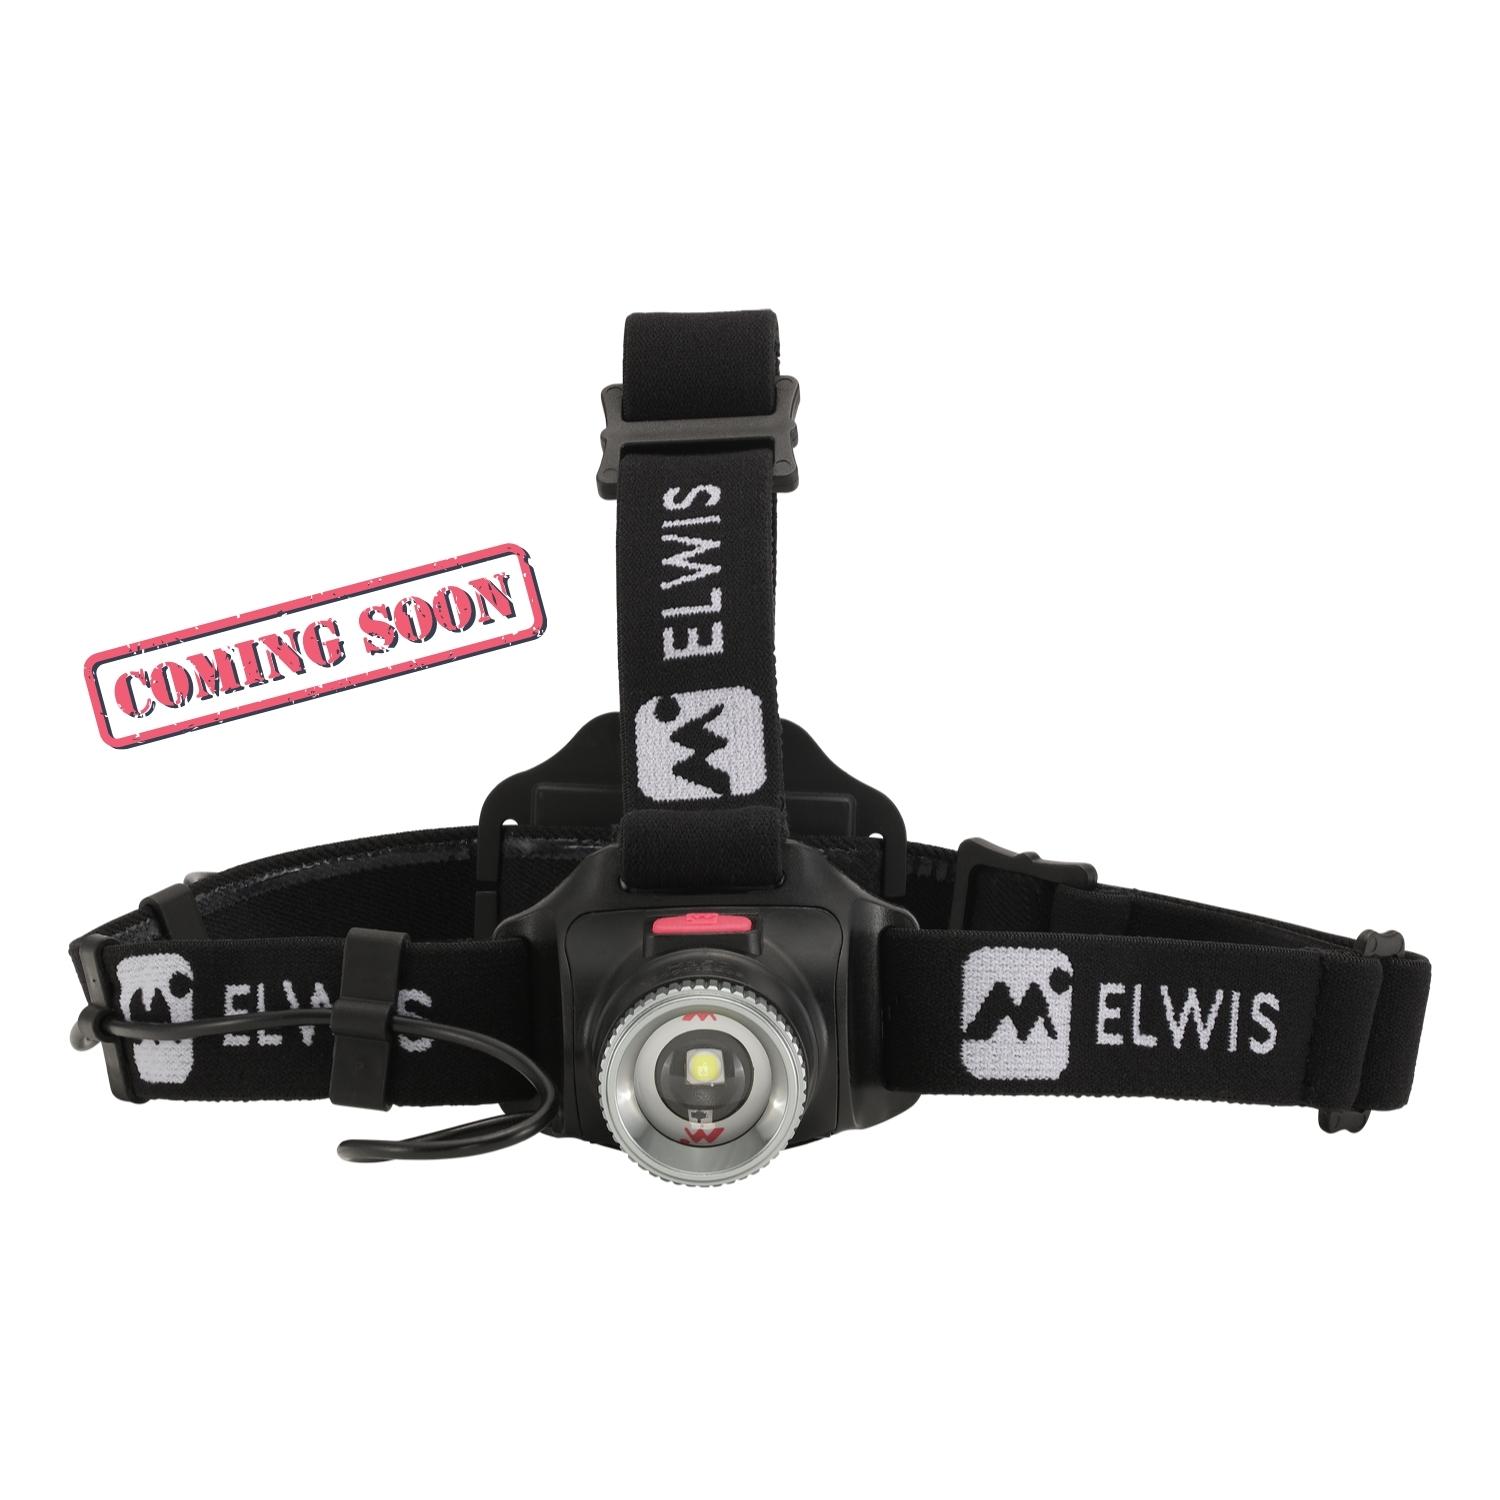 1x Elwis Pro 'S7' 3w Cree LED Optical Lens Aluminium Pen Light Workshop Tools 